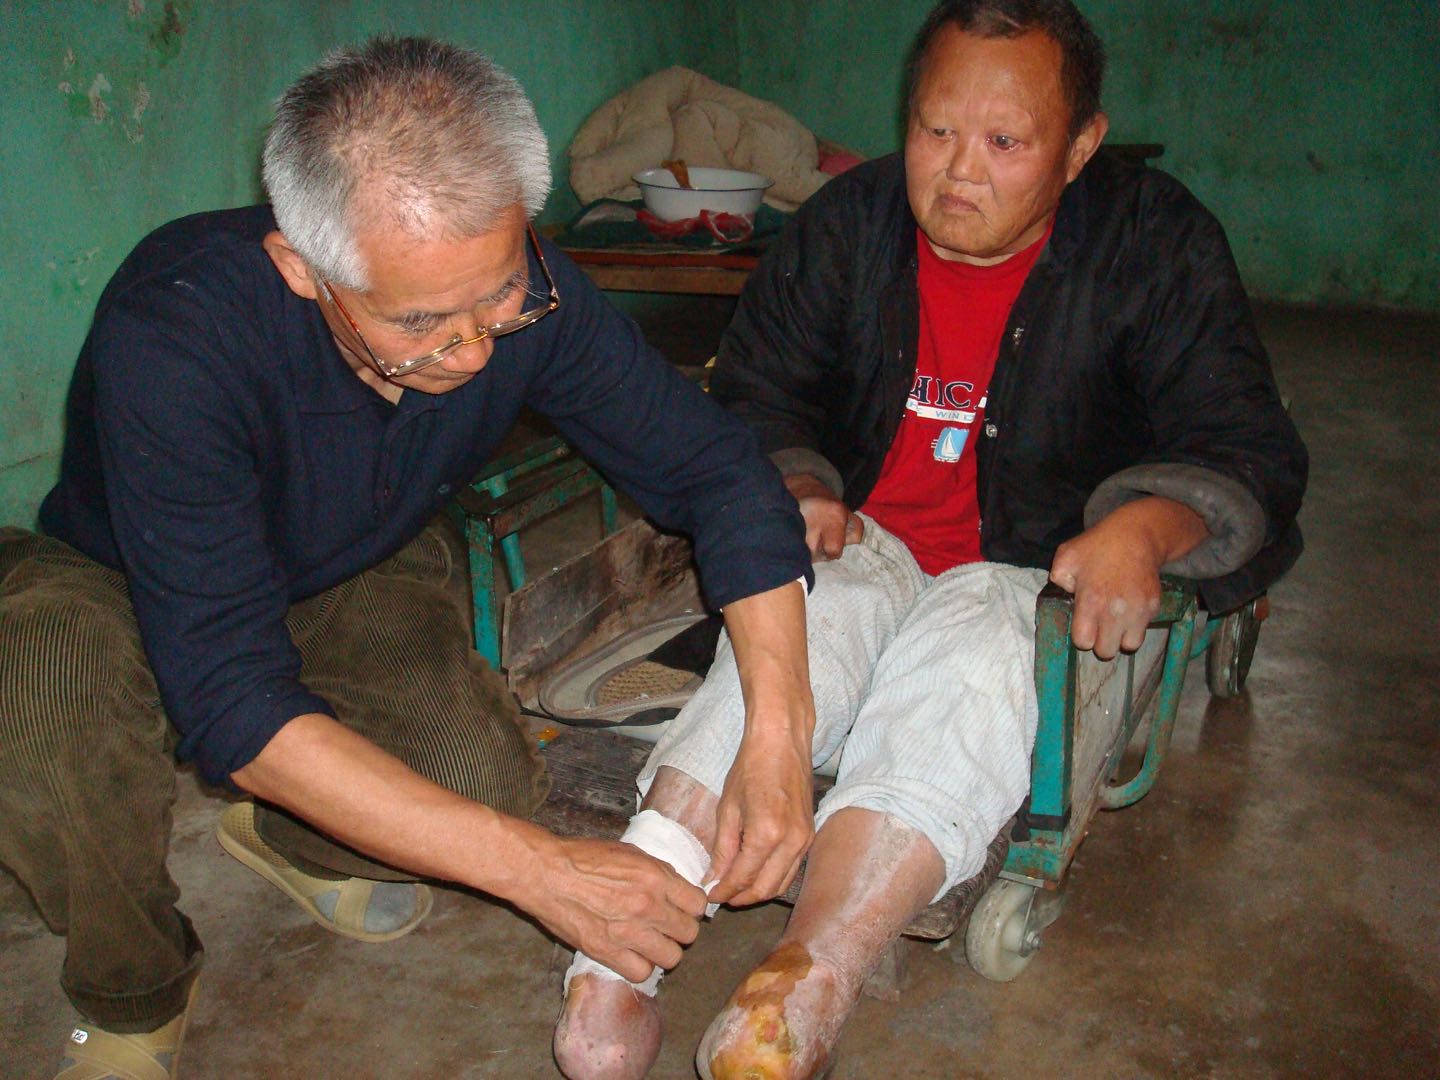 Grandpa Kim patched a leprosy survivor up.